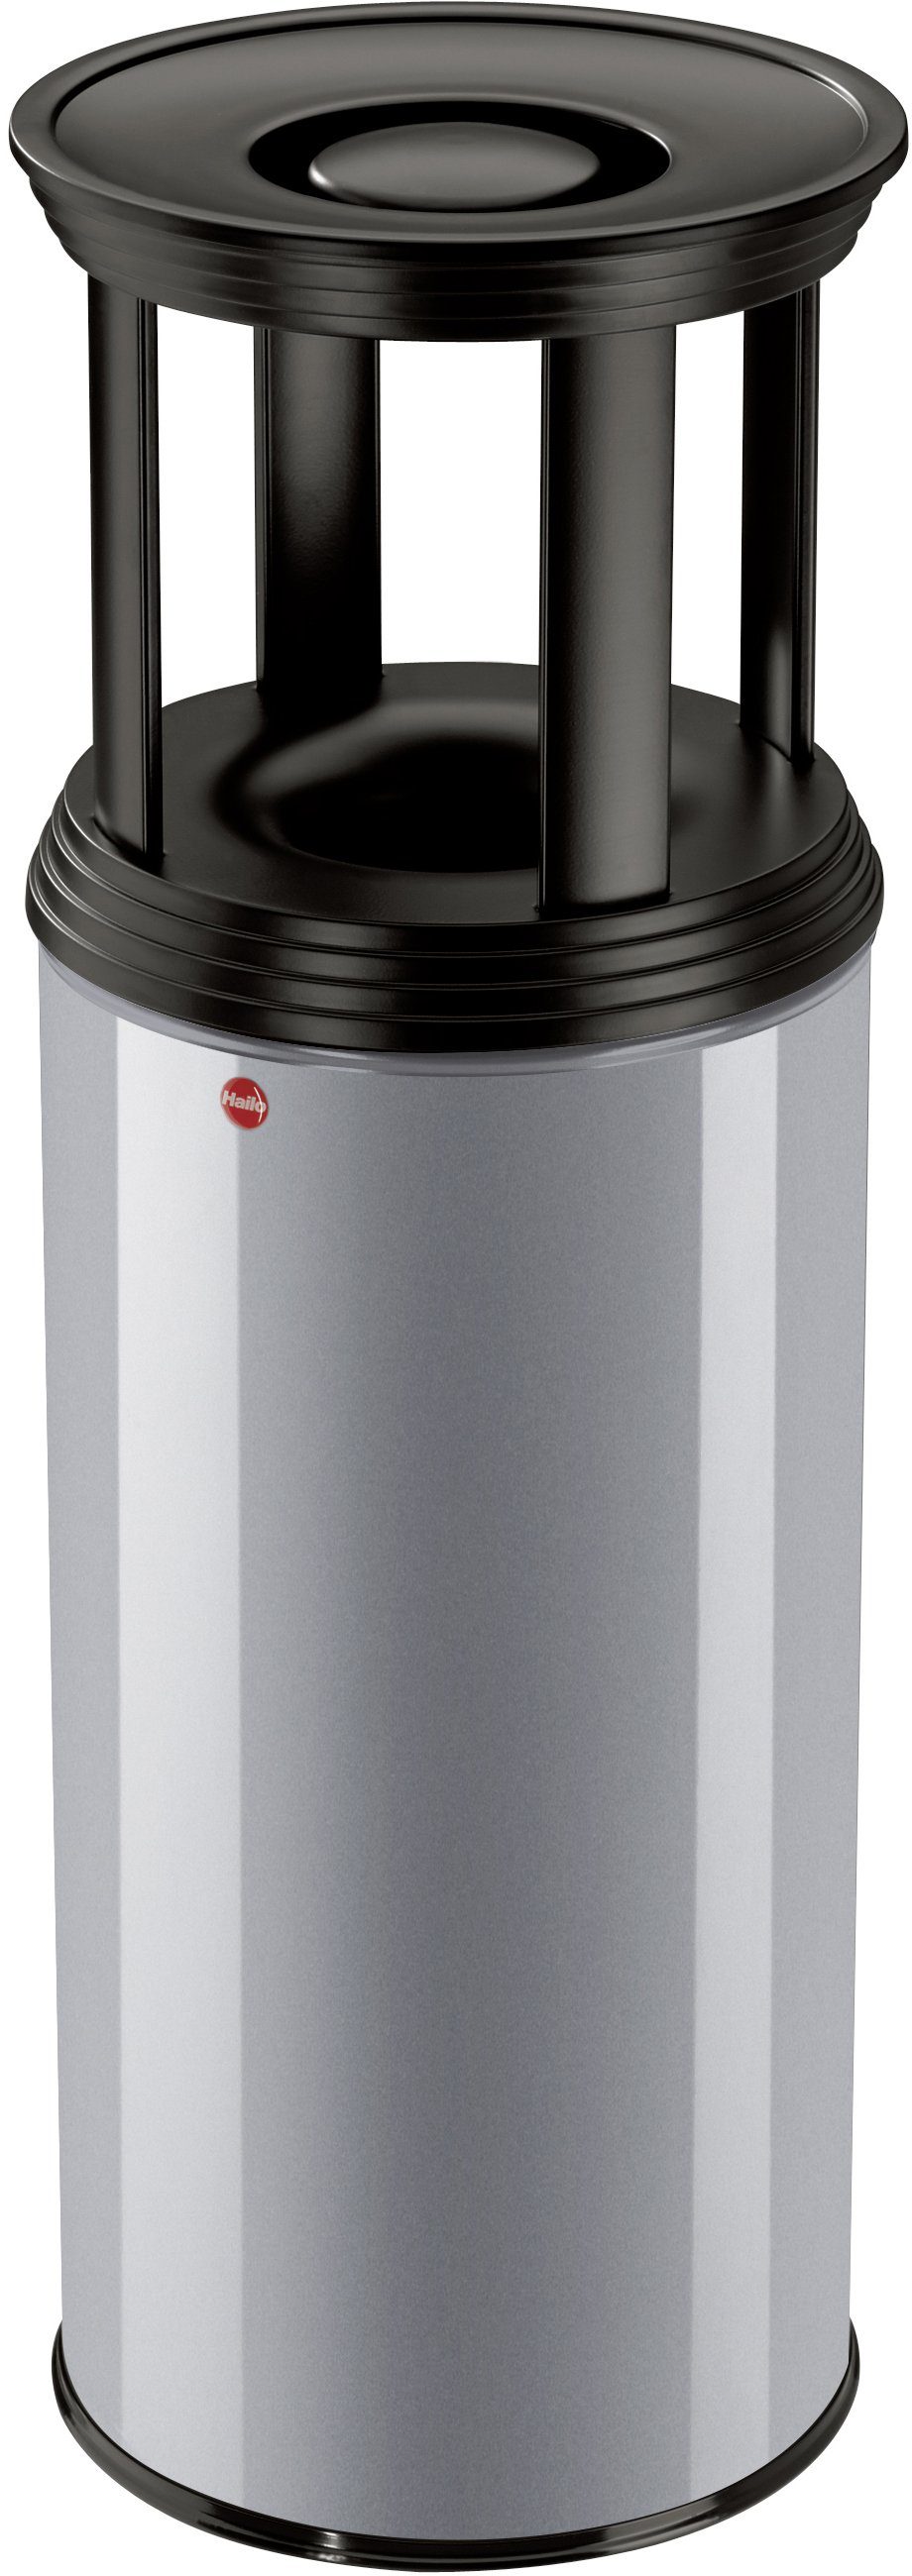 Hailo Aschenbecher ProfiLine Safe Plus XL, 45 Liter, Stahlblech, flammenlöschender Papierkorb mit Ascherschale aluminiumfarben/schwarz | Papierkörbe